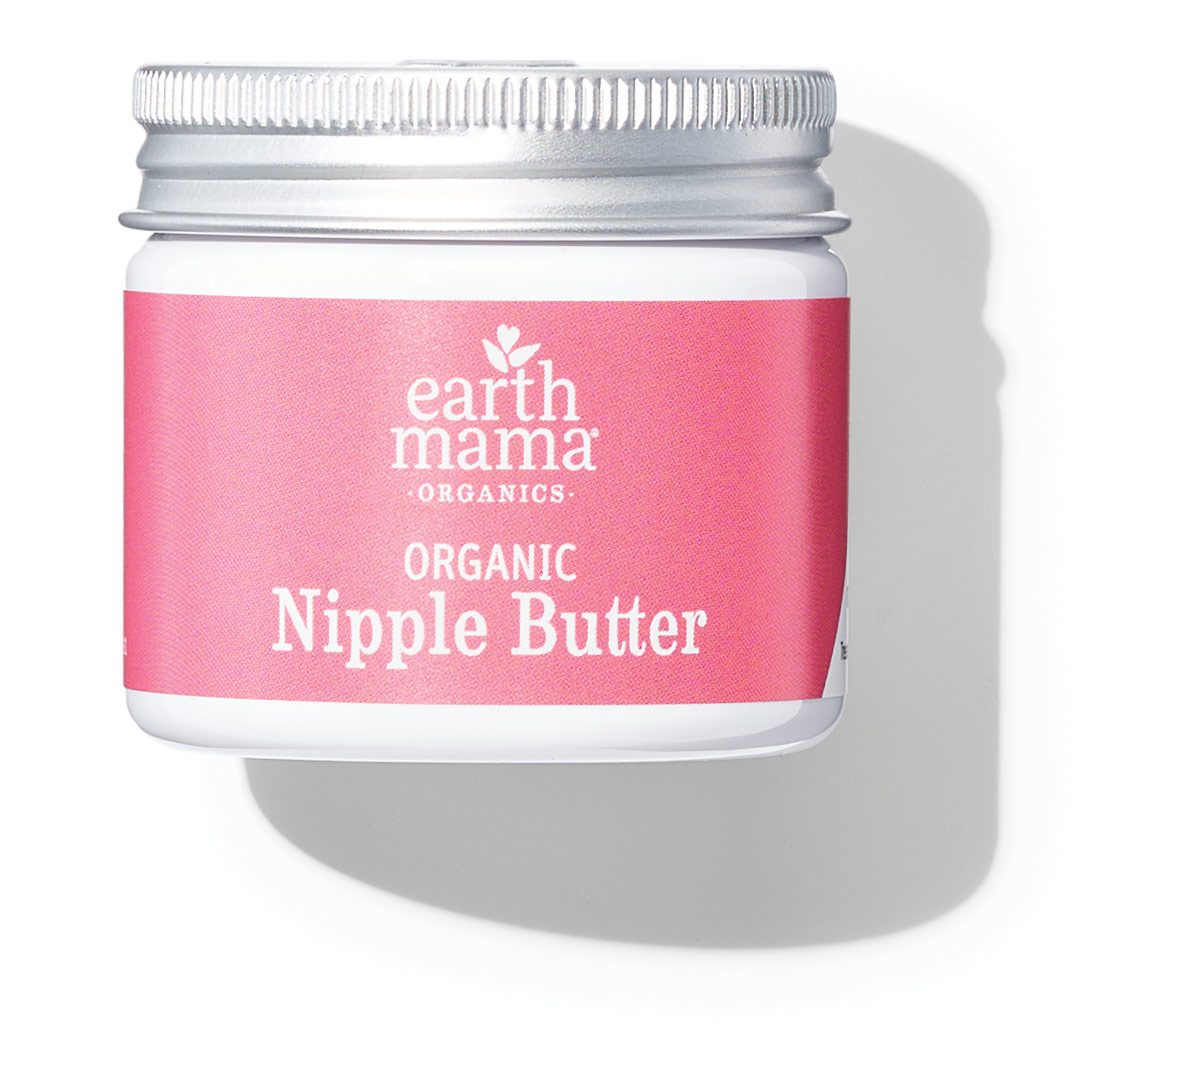 The Best Nipple Balm: Organic Nipple Butter